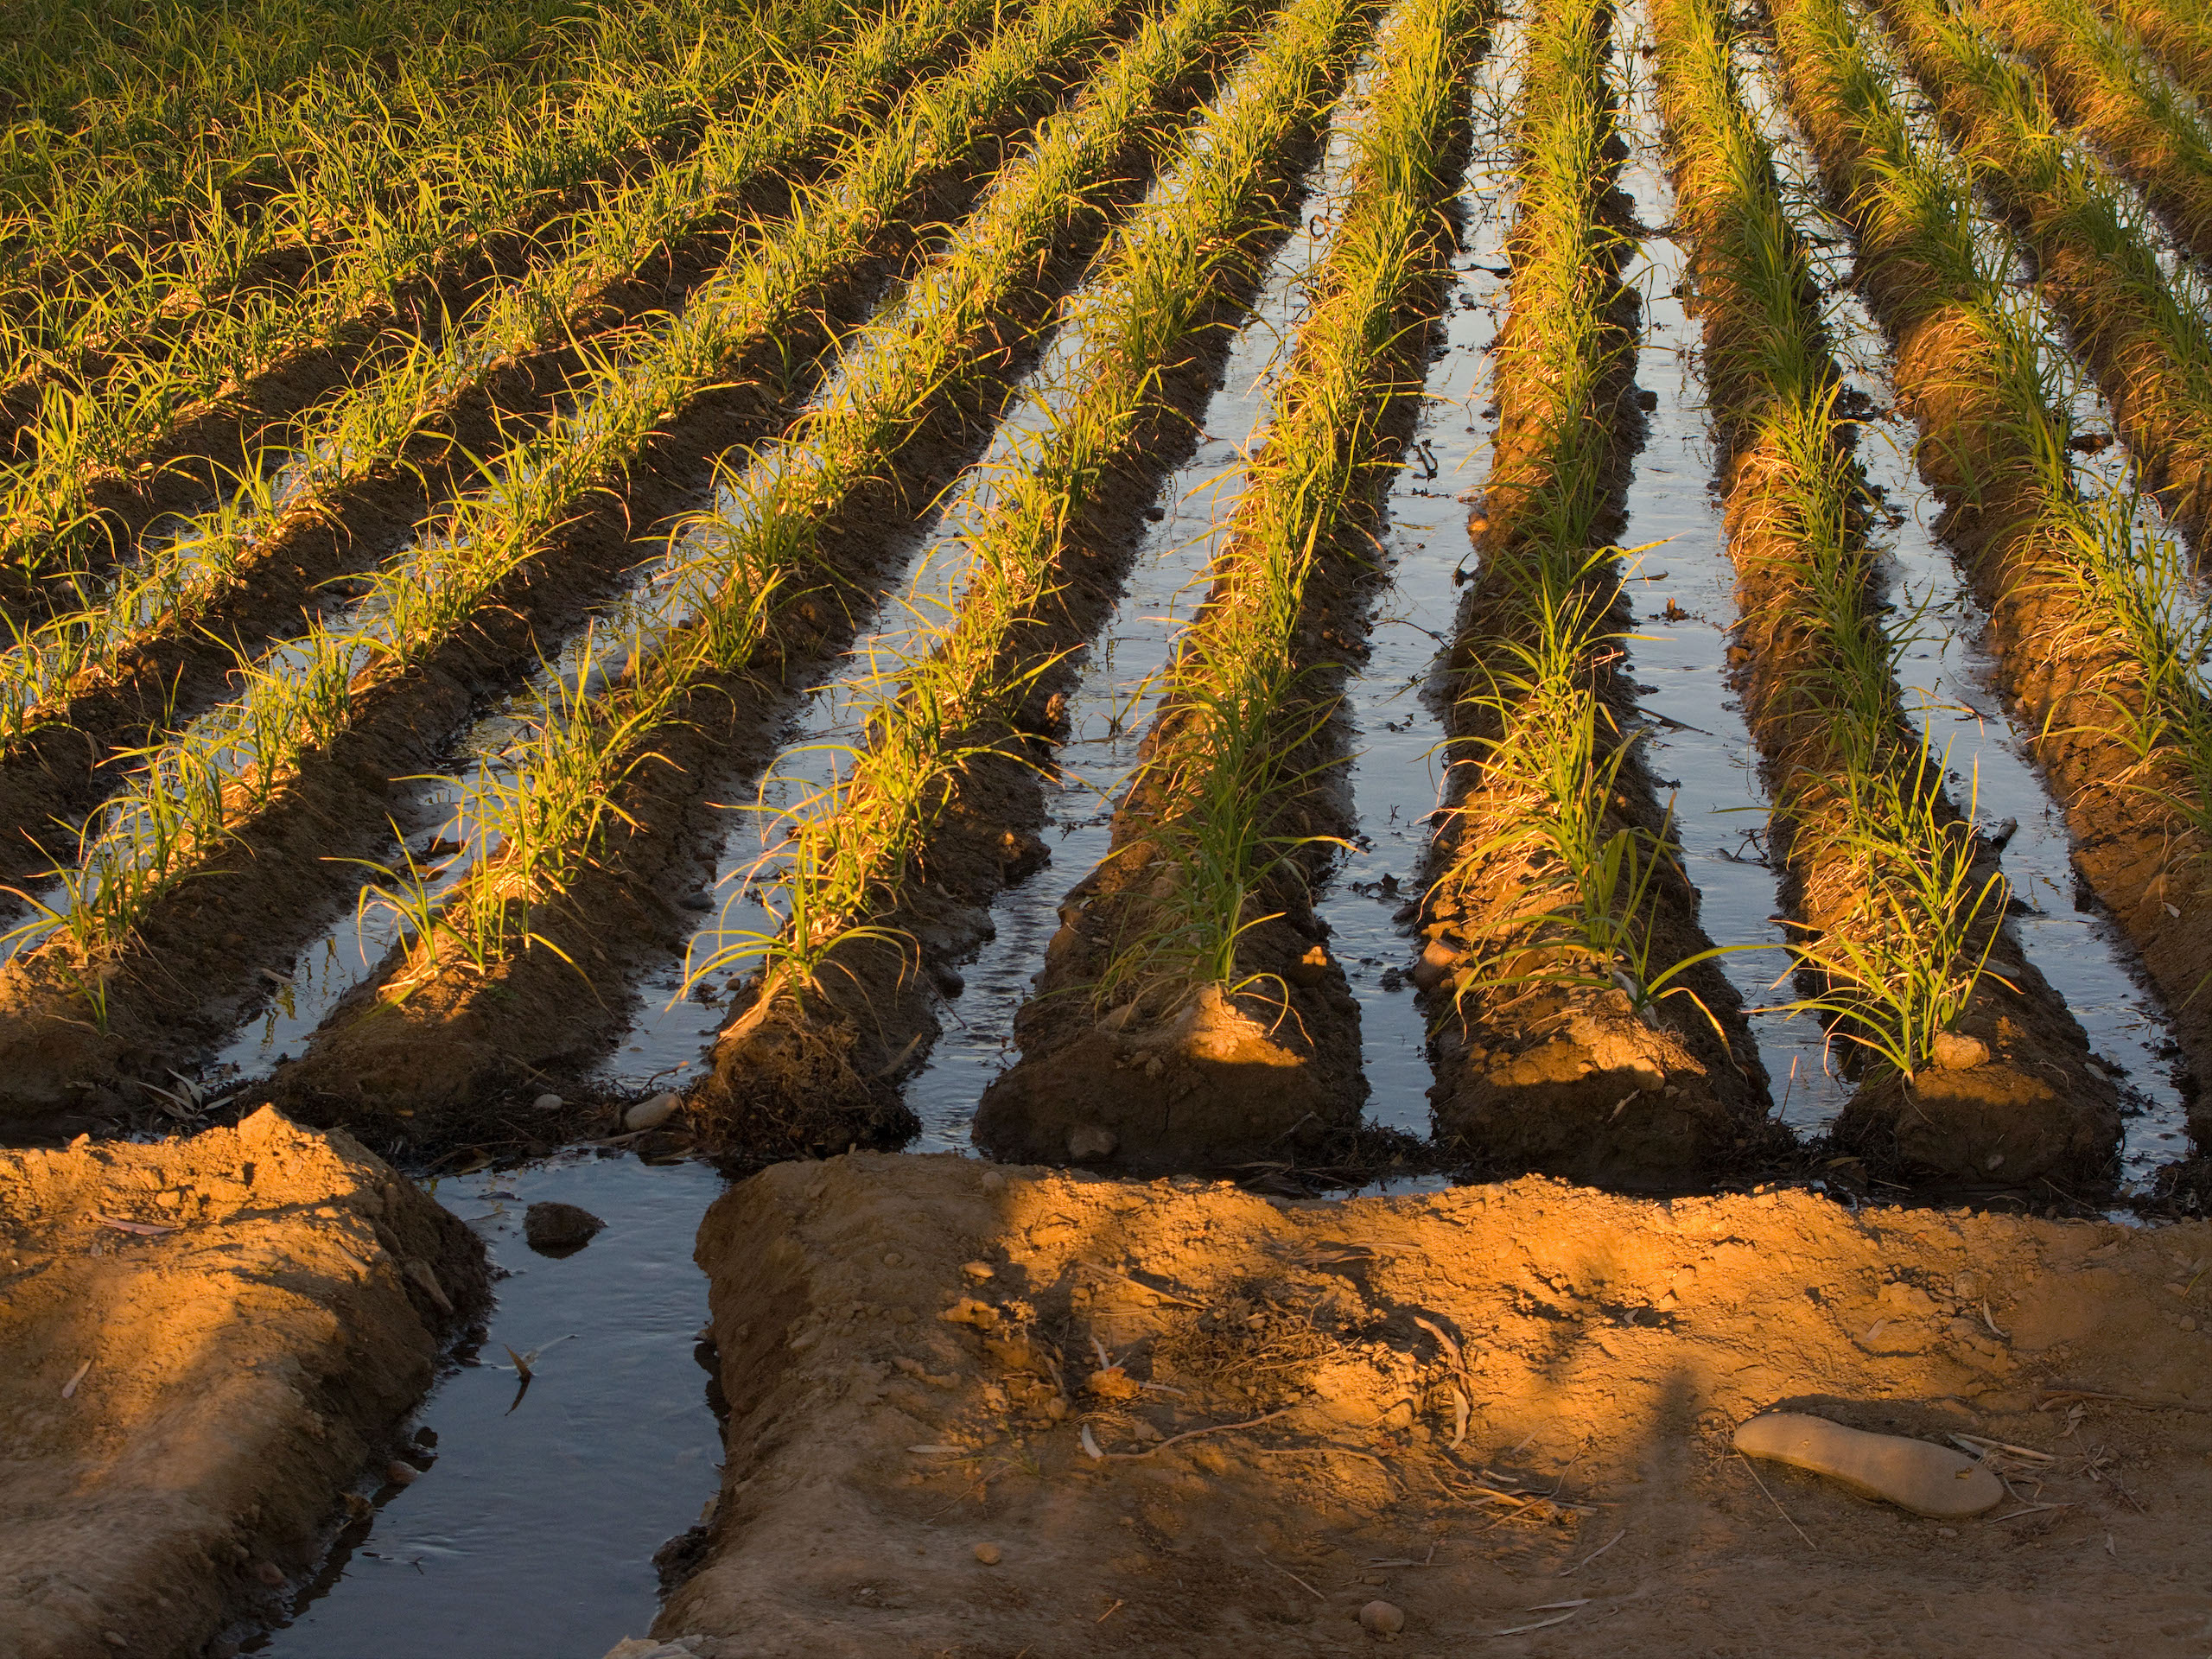 Irrigation in winter croplands in Argentina